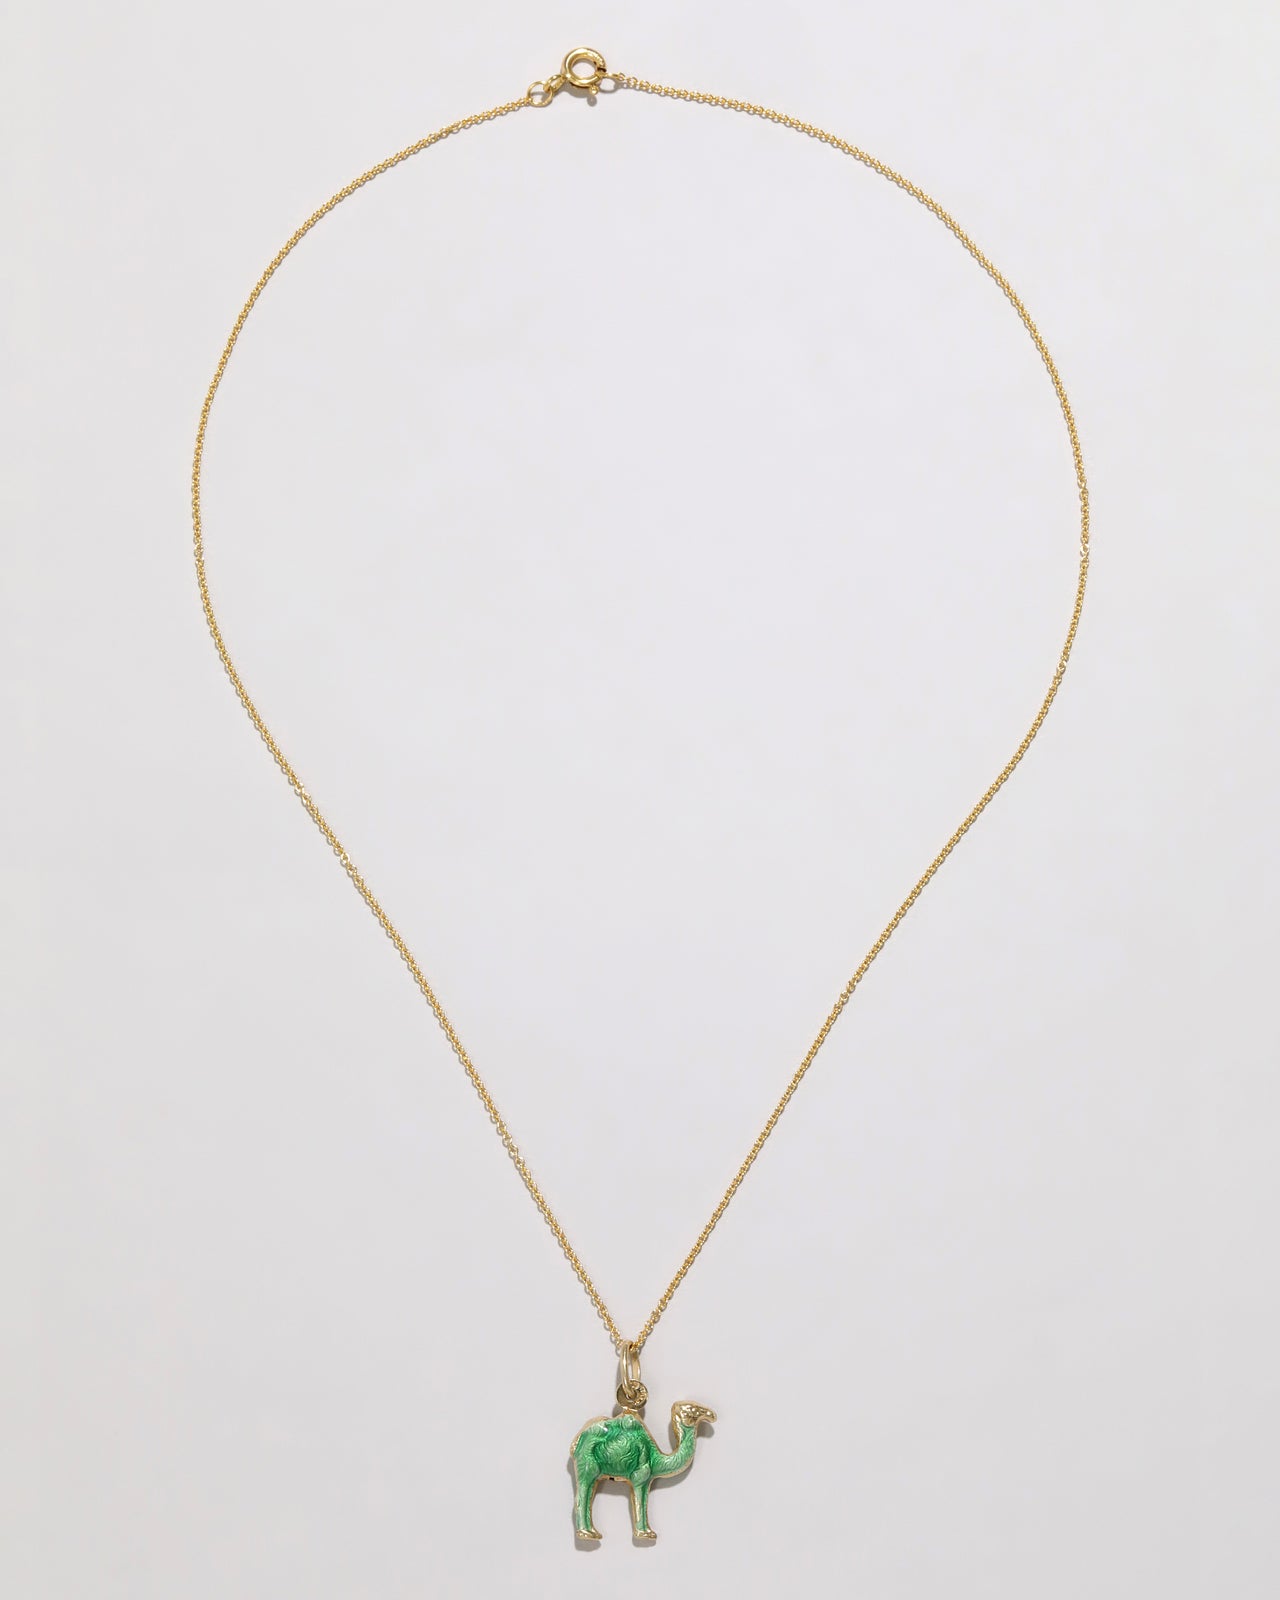 Vintage 1980s 14k Gold Enamel Camel Pendant Necklace - Photo 2